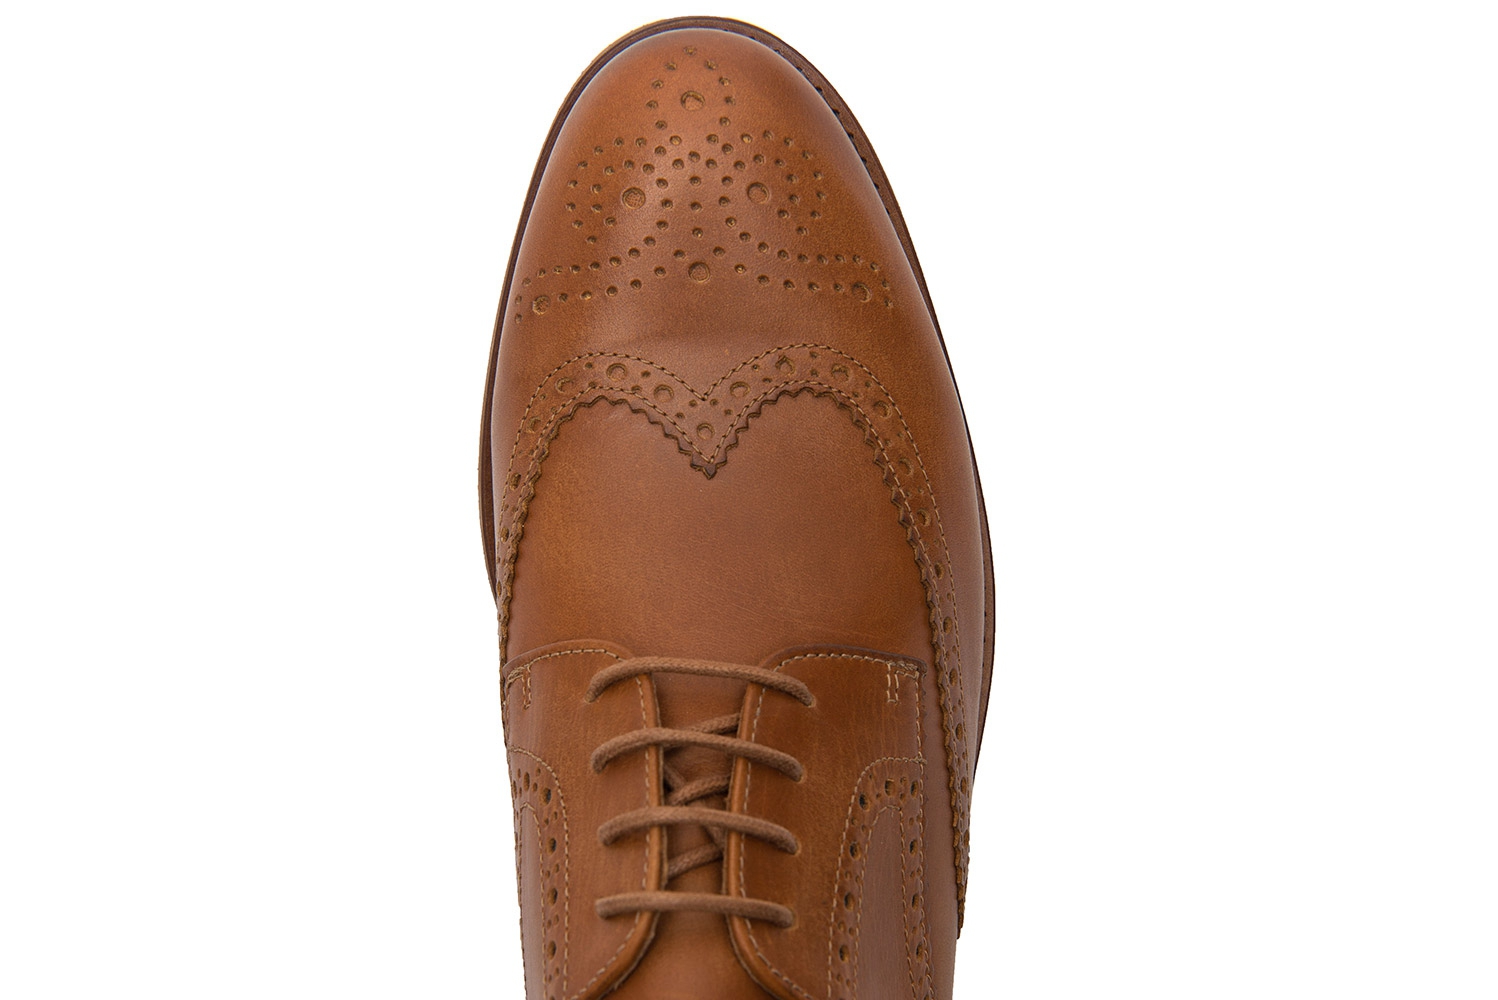 Pantofi Bigotti maro piele naturala 3